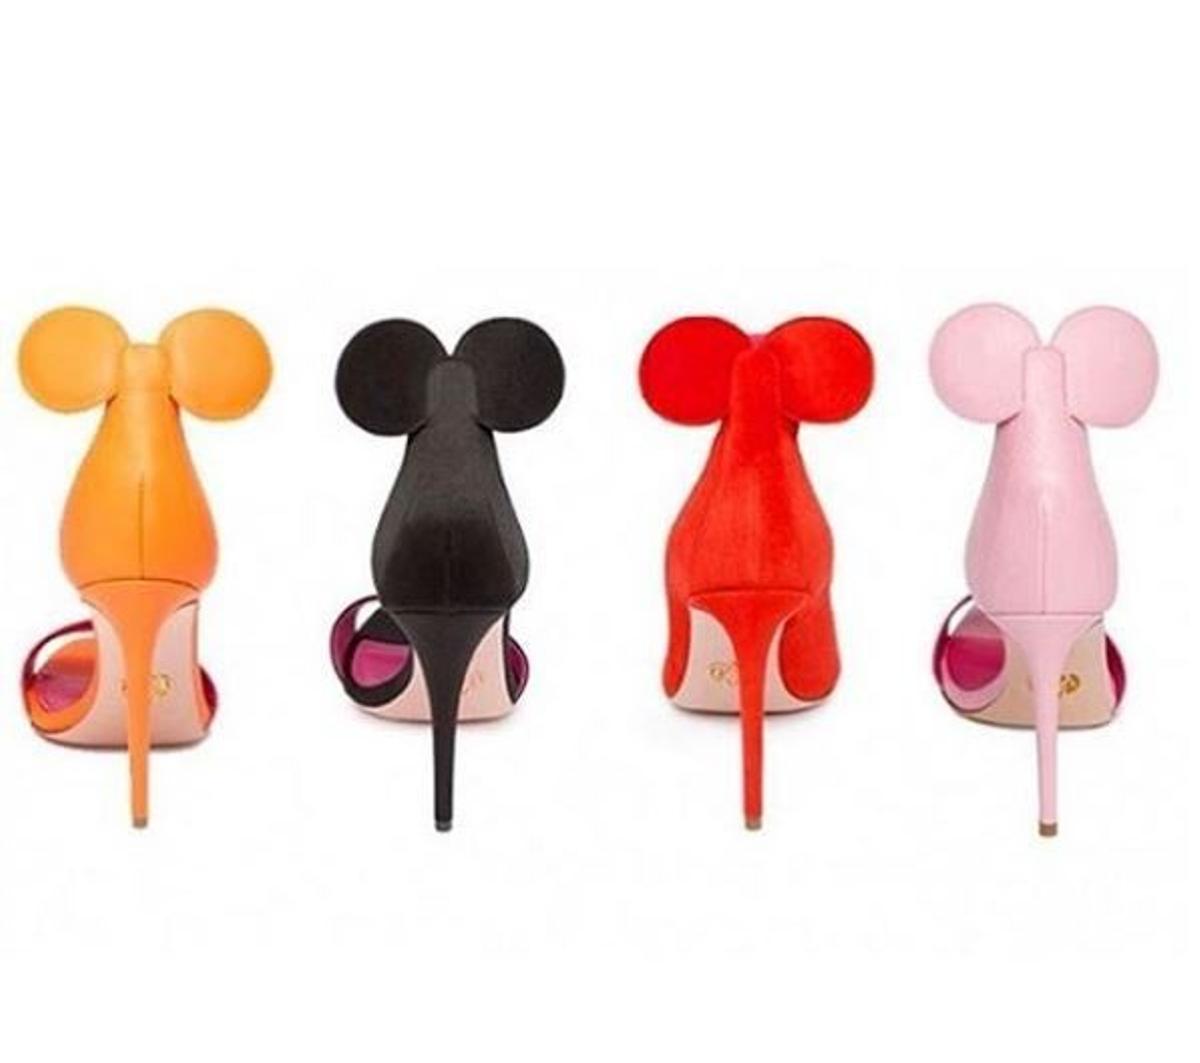 Las sandalias 'Minnie' que triunfan en instagram